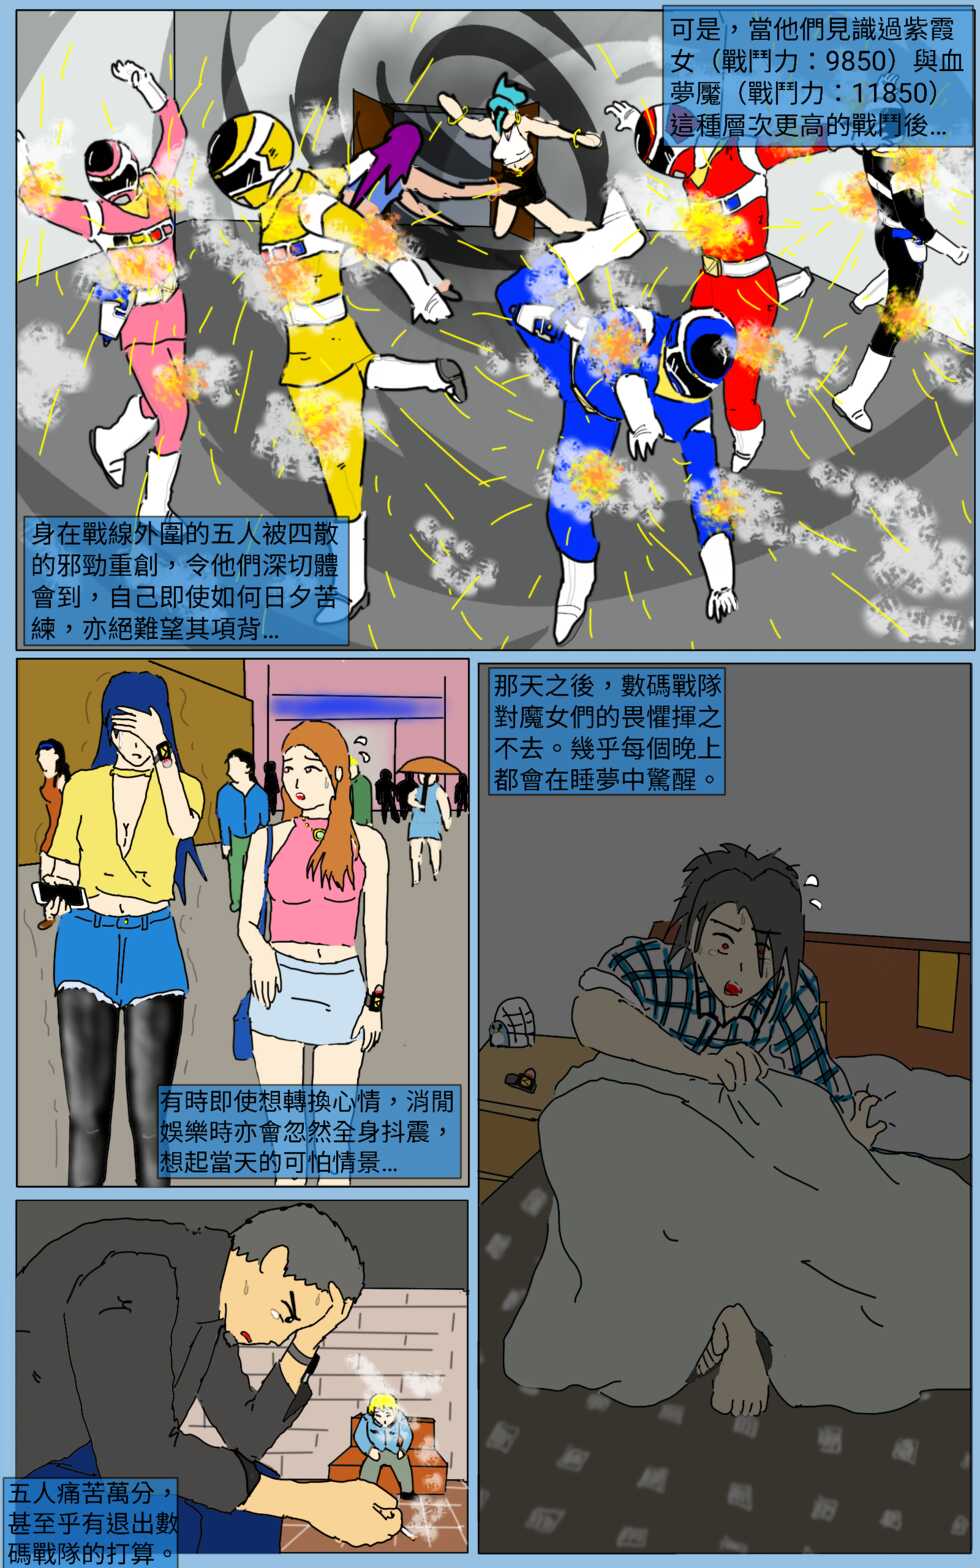 [MA] Mission 17 (Denji Sentai Megaranger) - Page 2